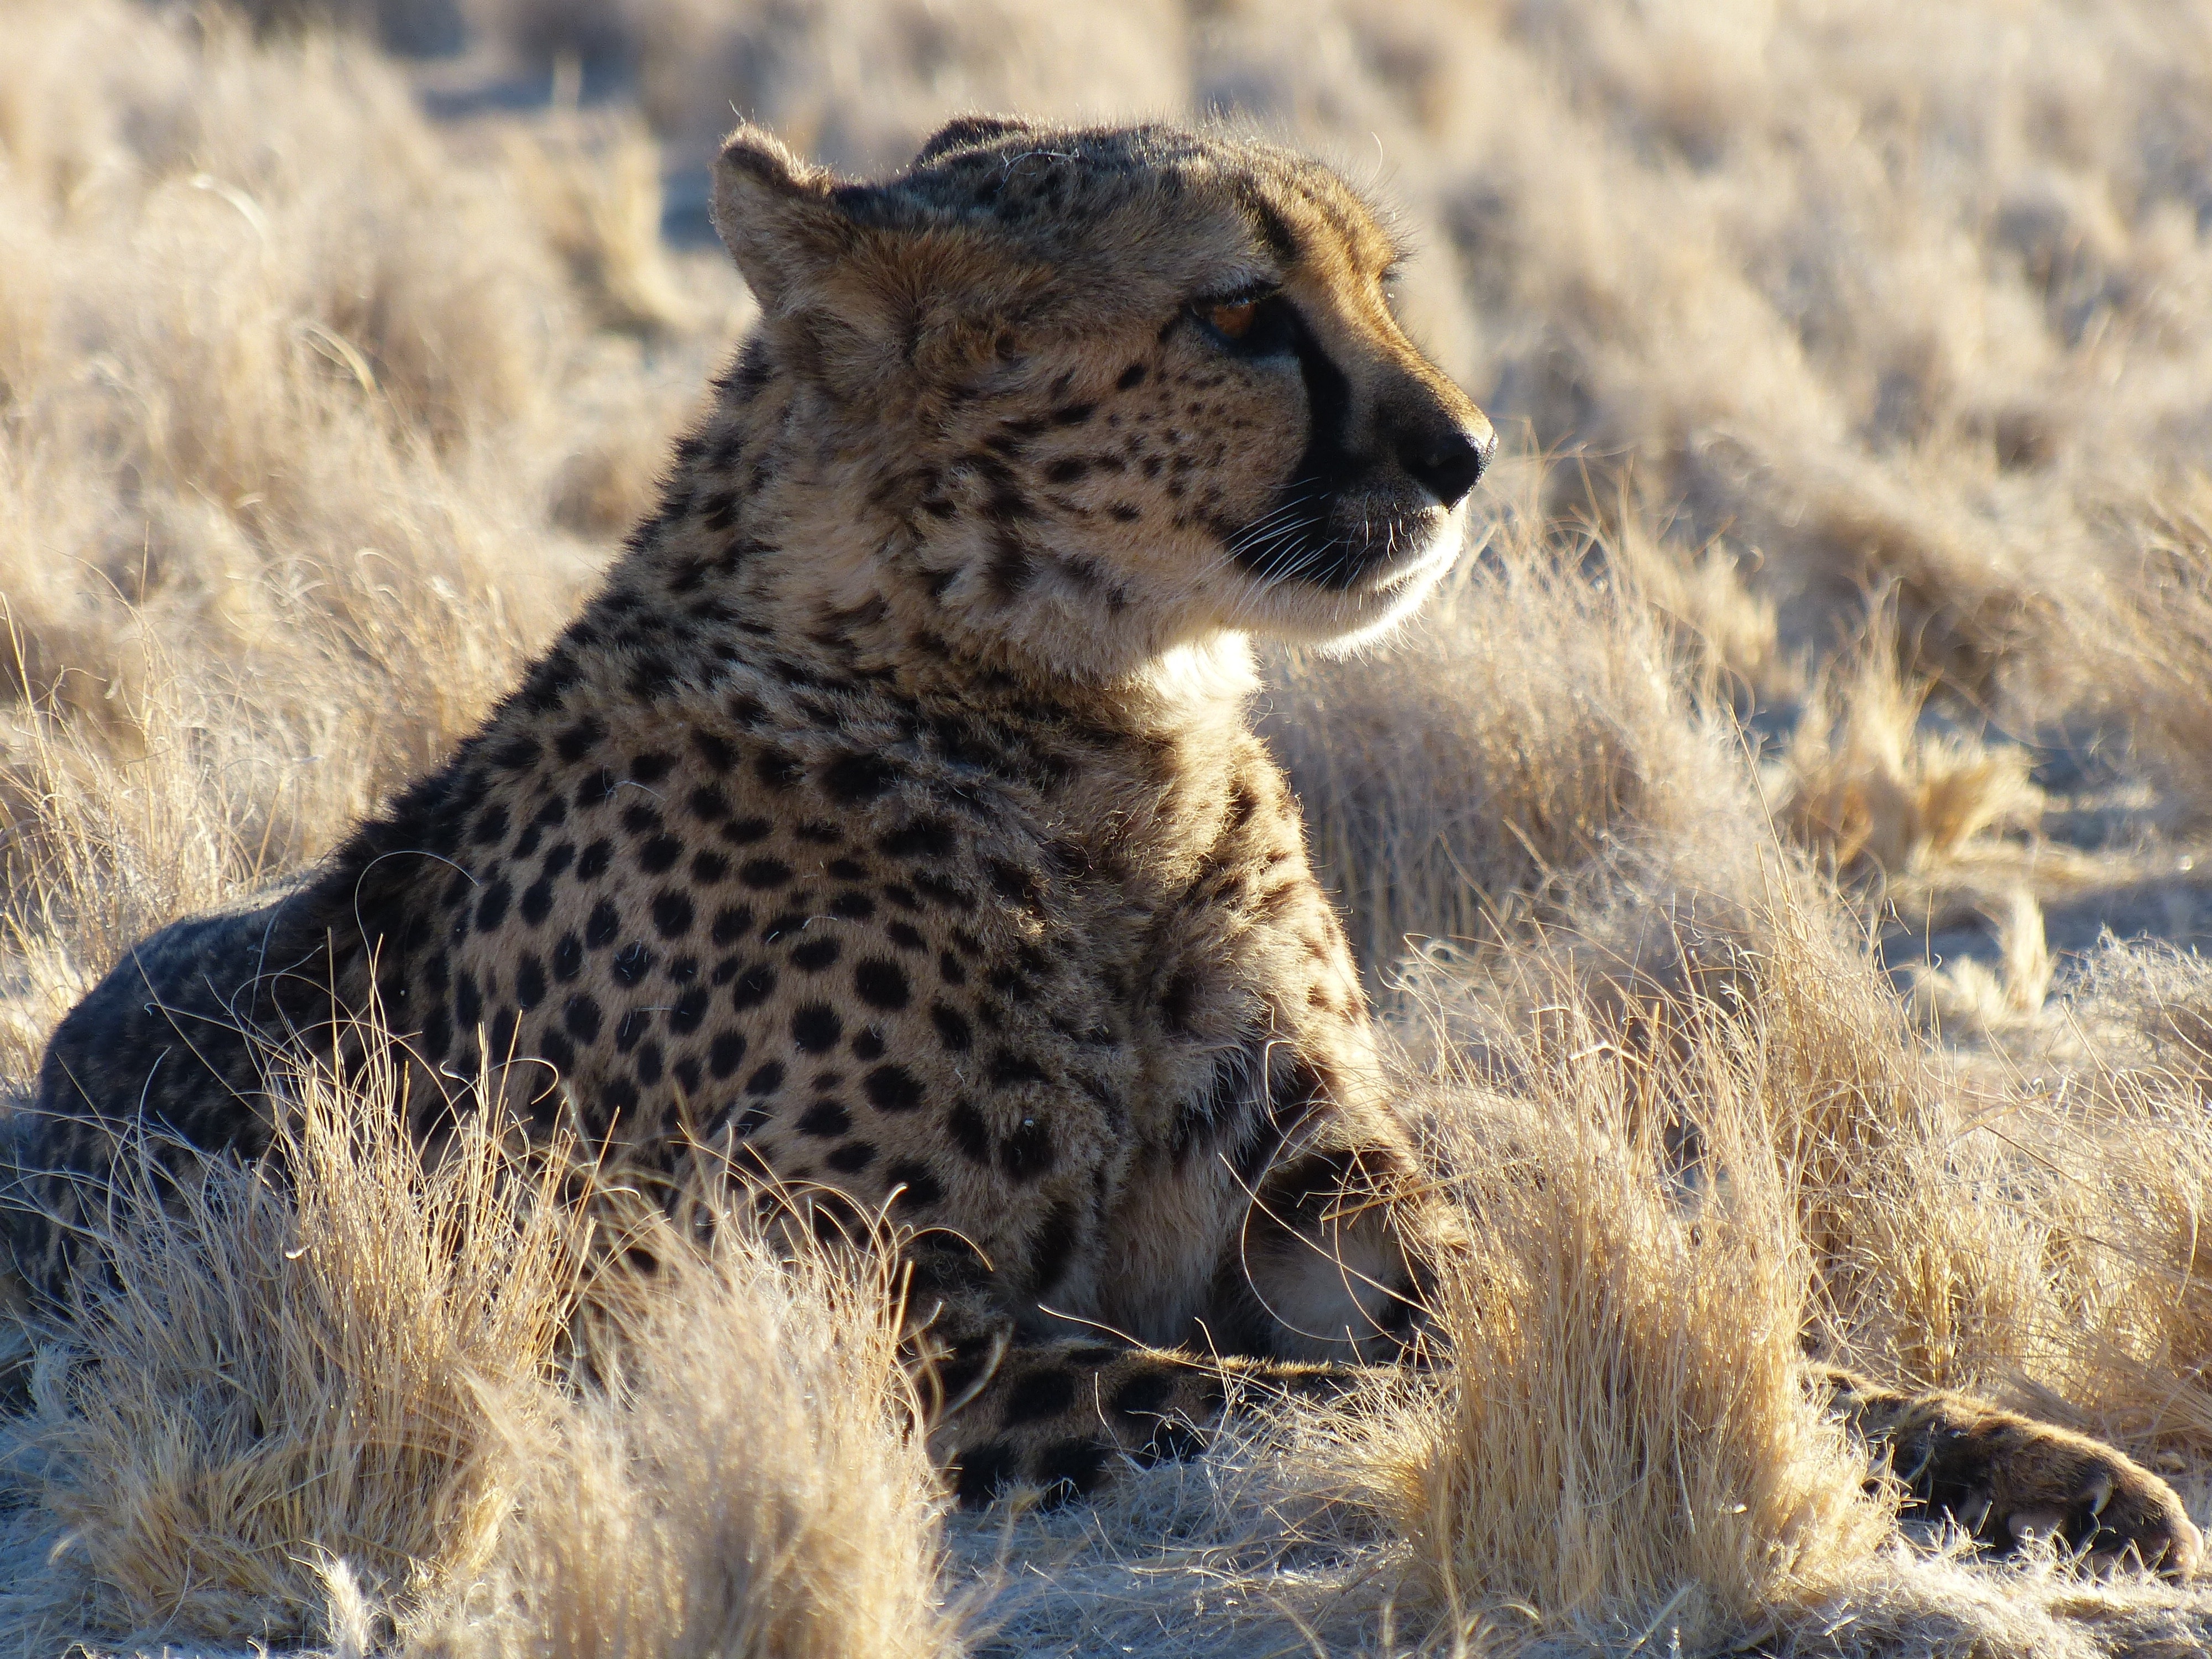 Cheetah, Namibia, Safari, Africa, animals in the wild, one animal